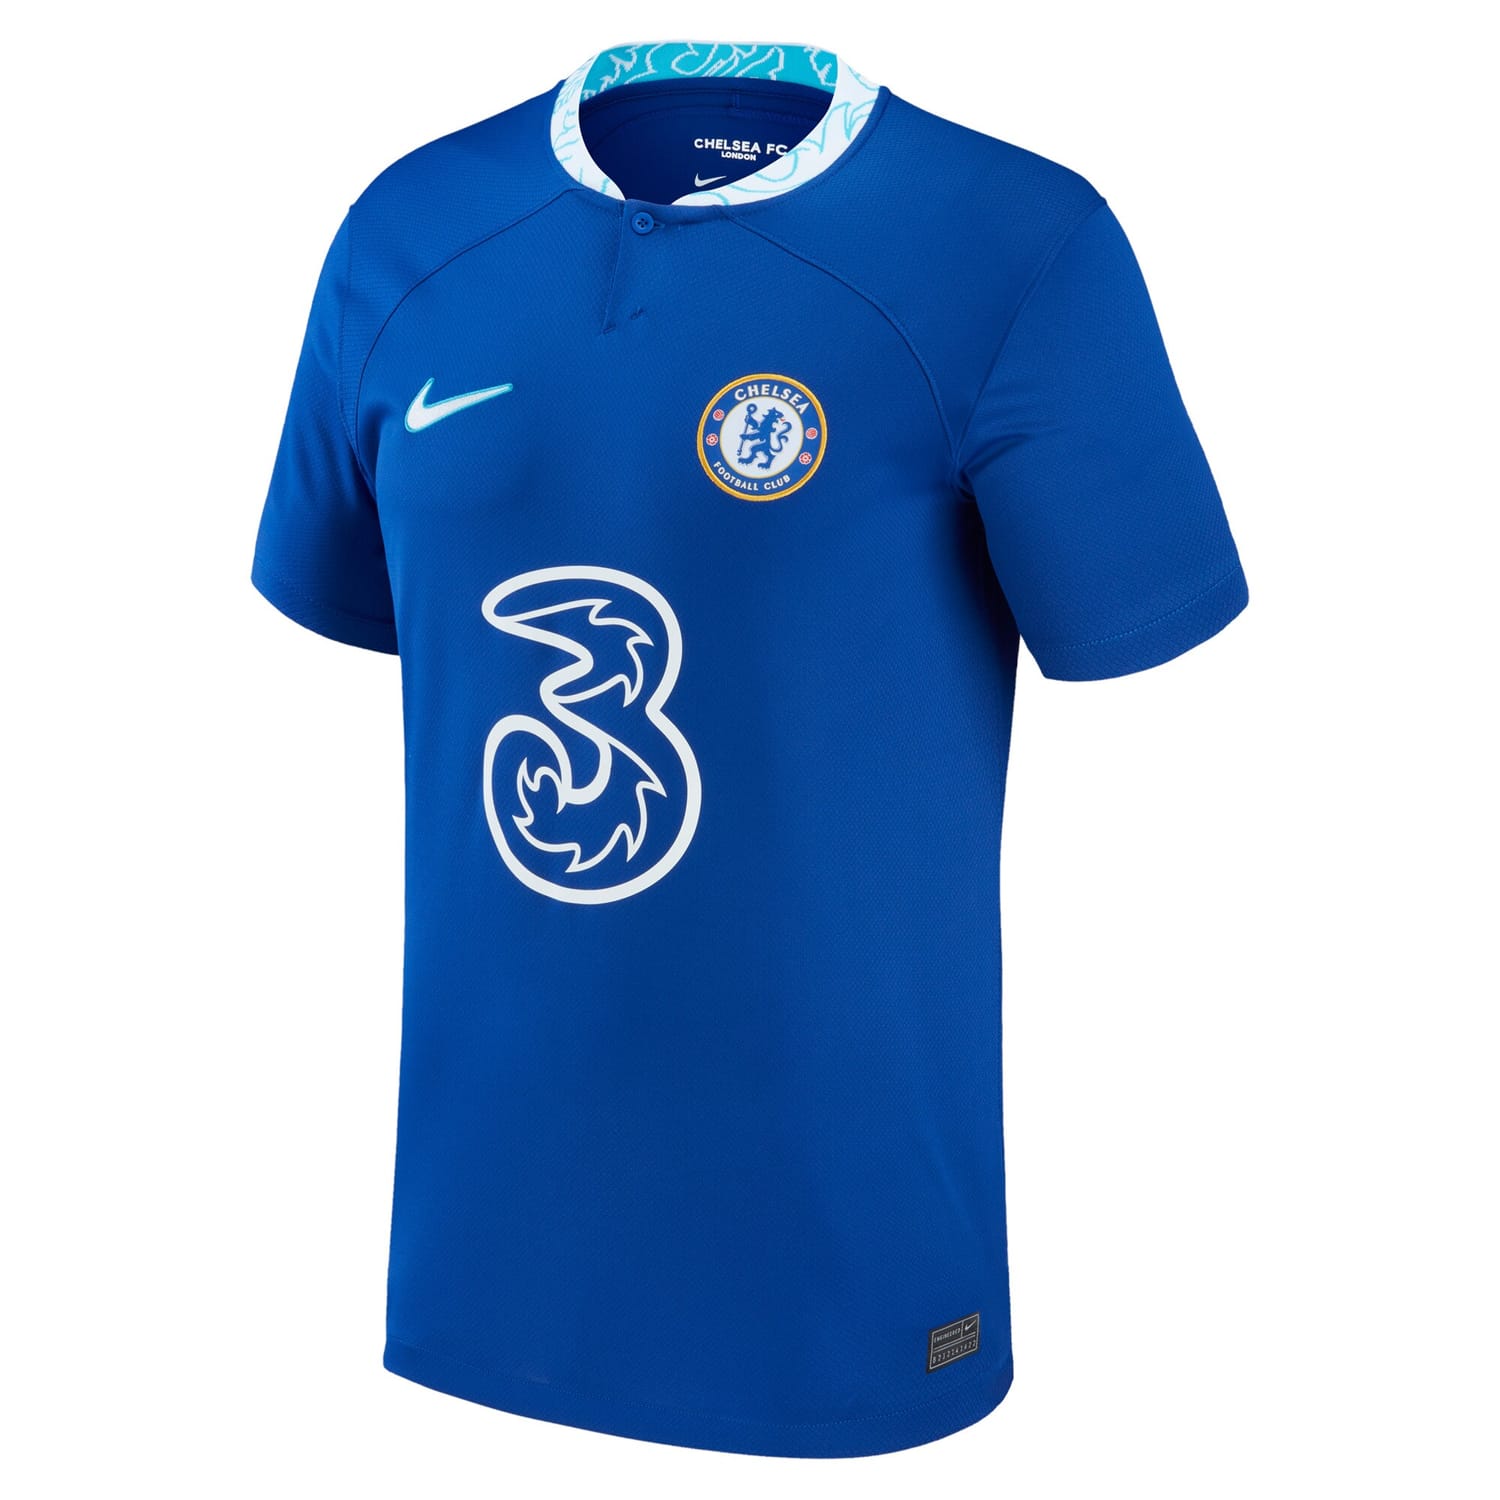 Premier League Chelsea Home Jersey Shirt 2022-23 player N'Golo Kante 7 printing for Men